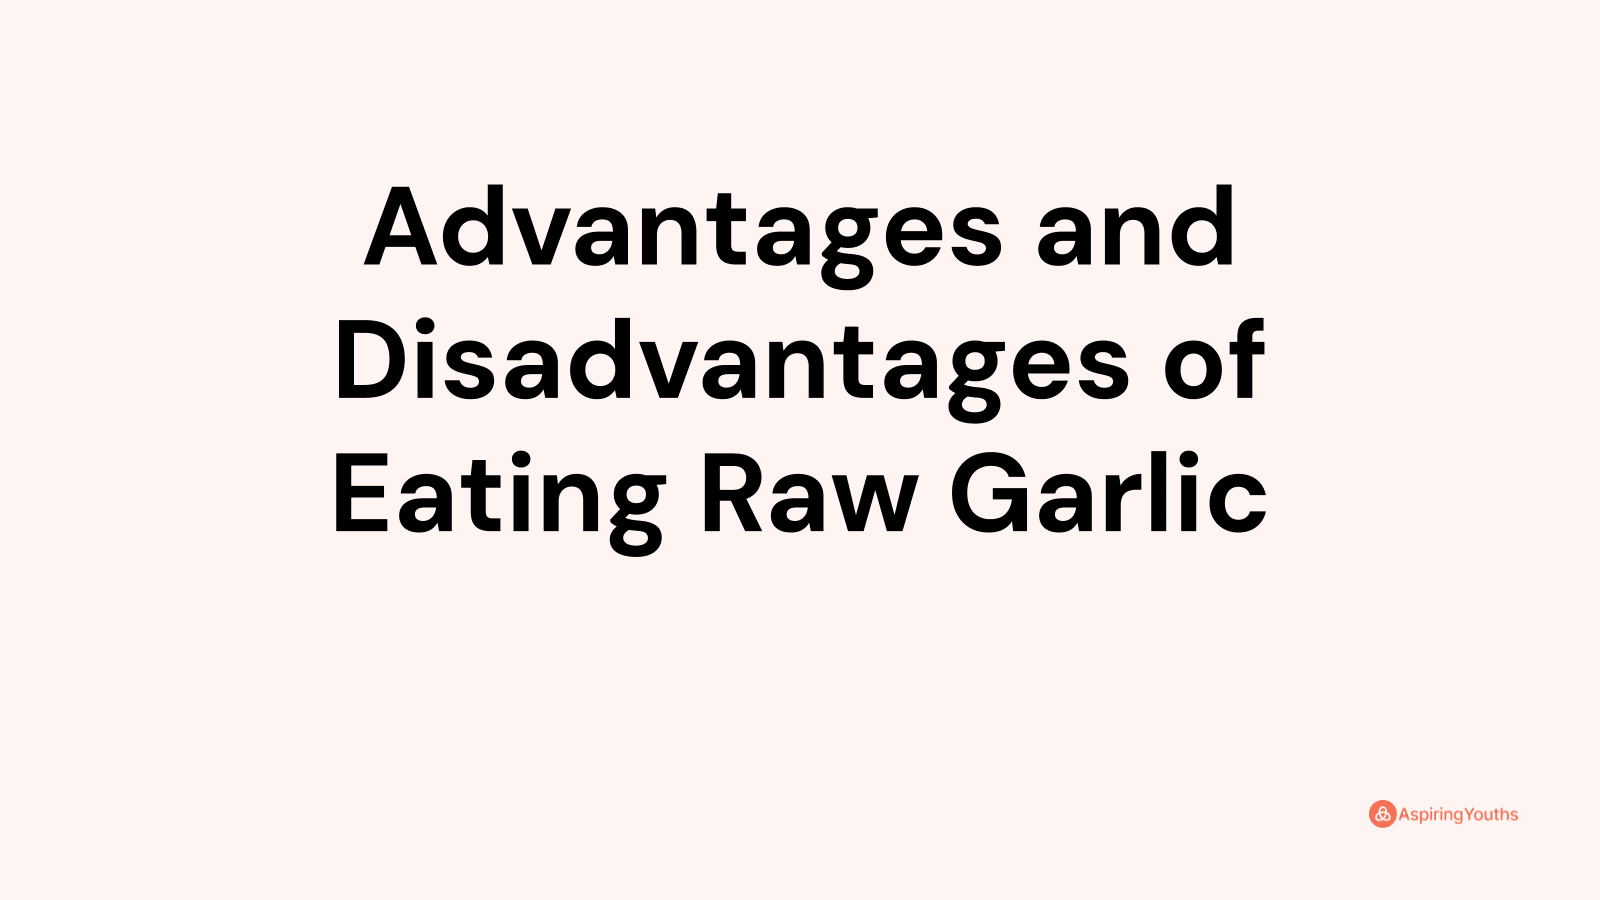 Advantages and disadvantages of Eating Raw Garlic